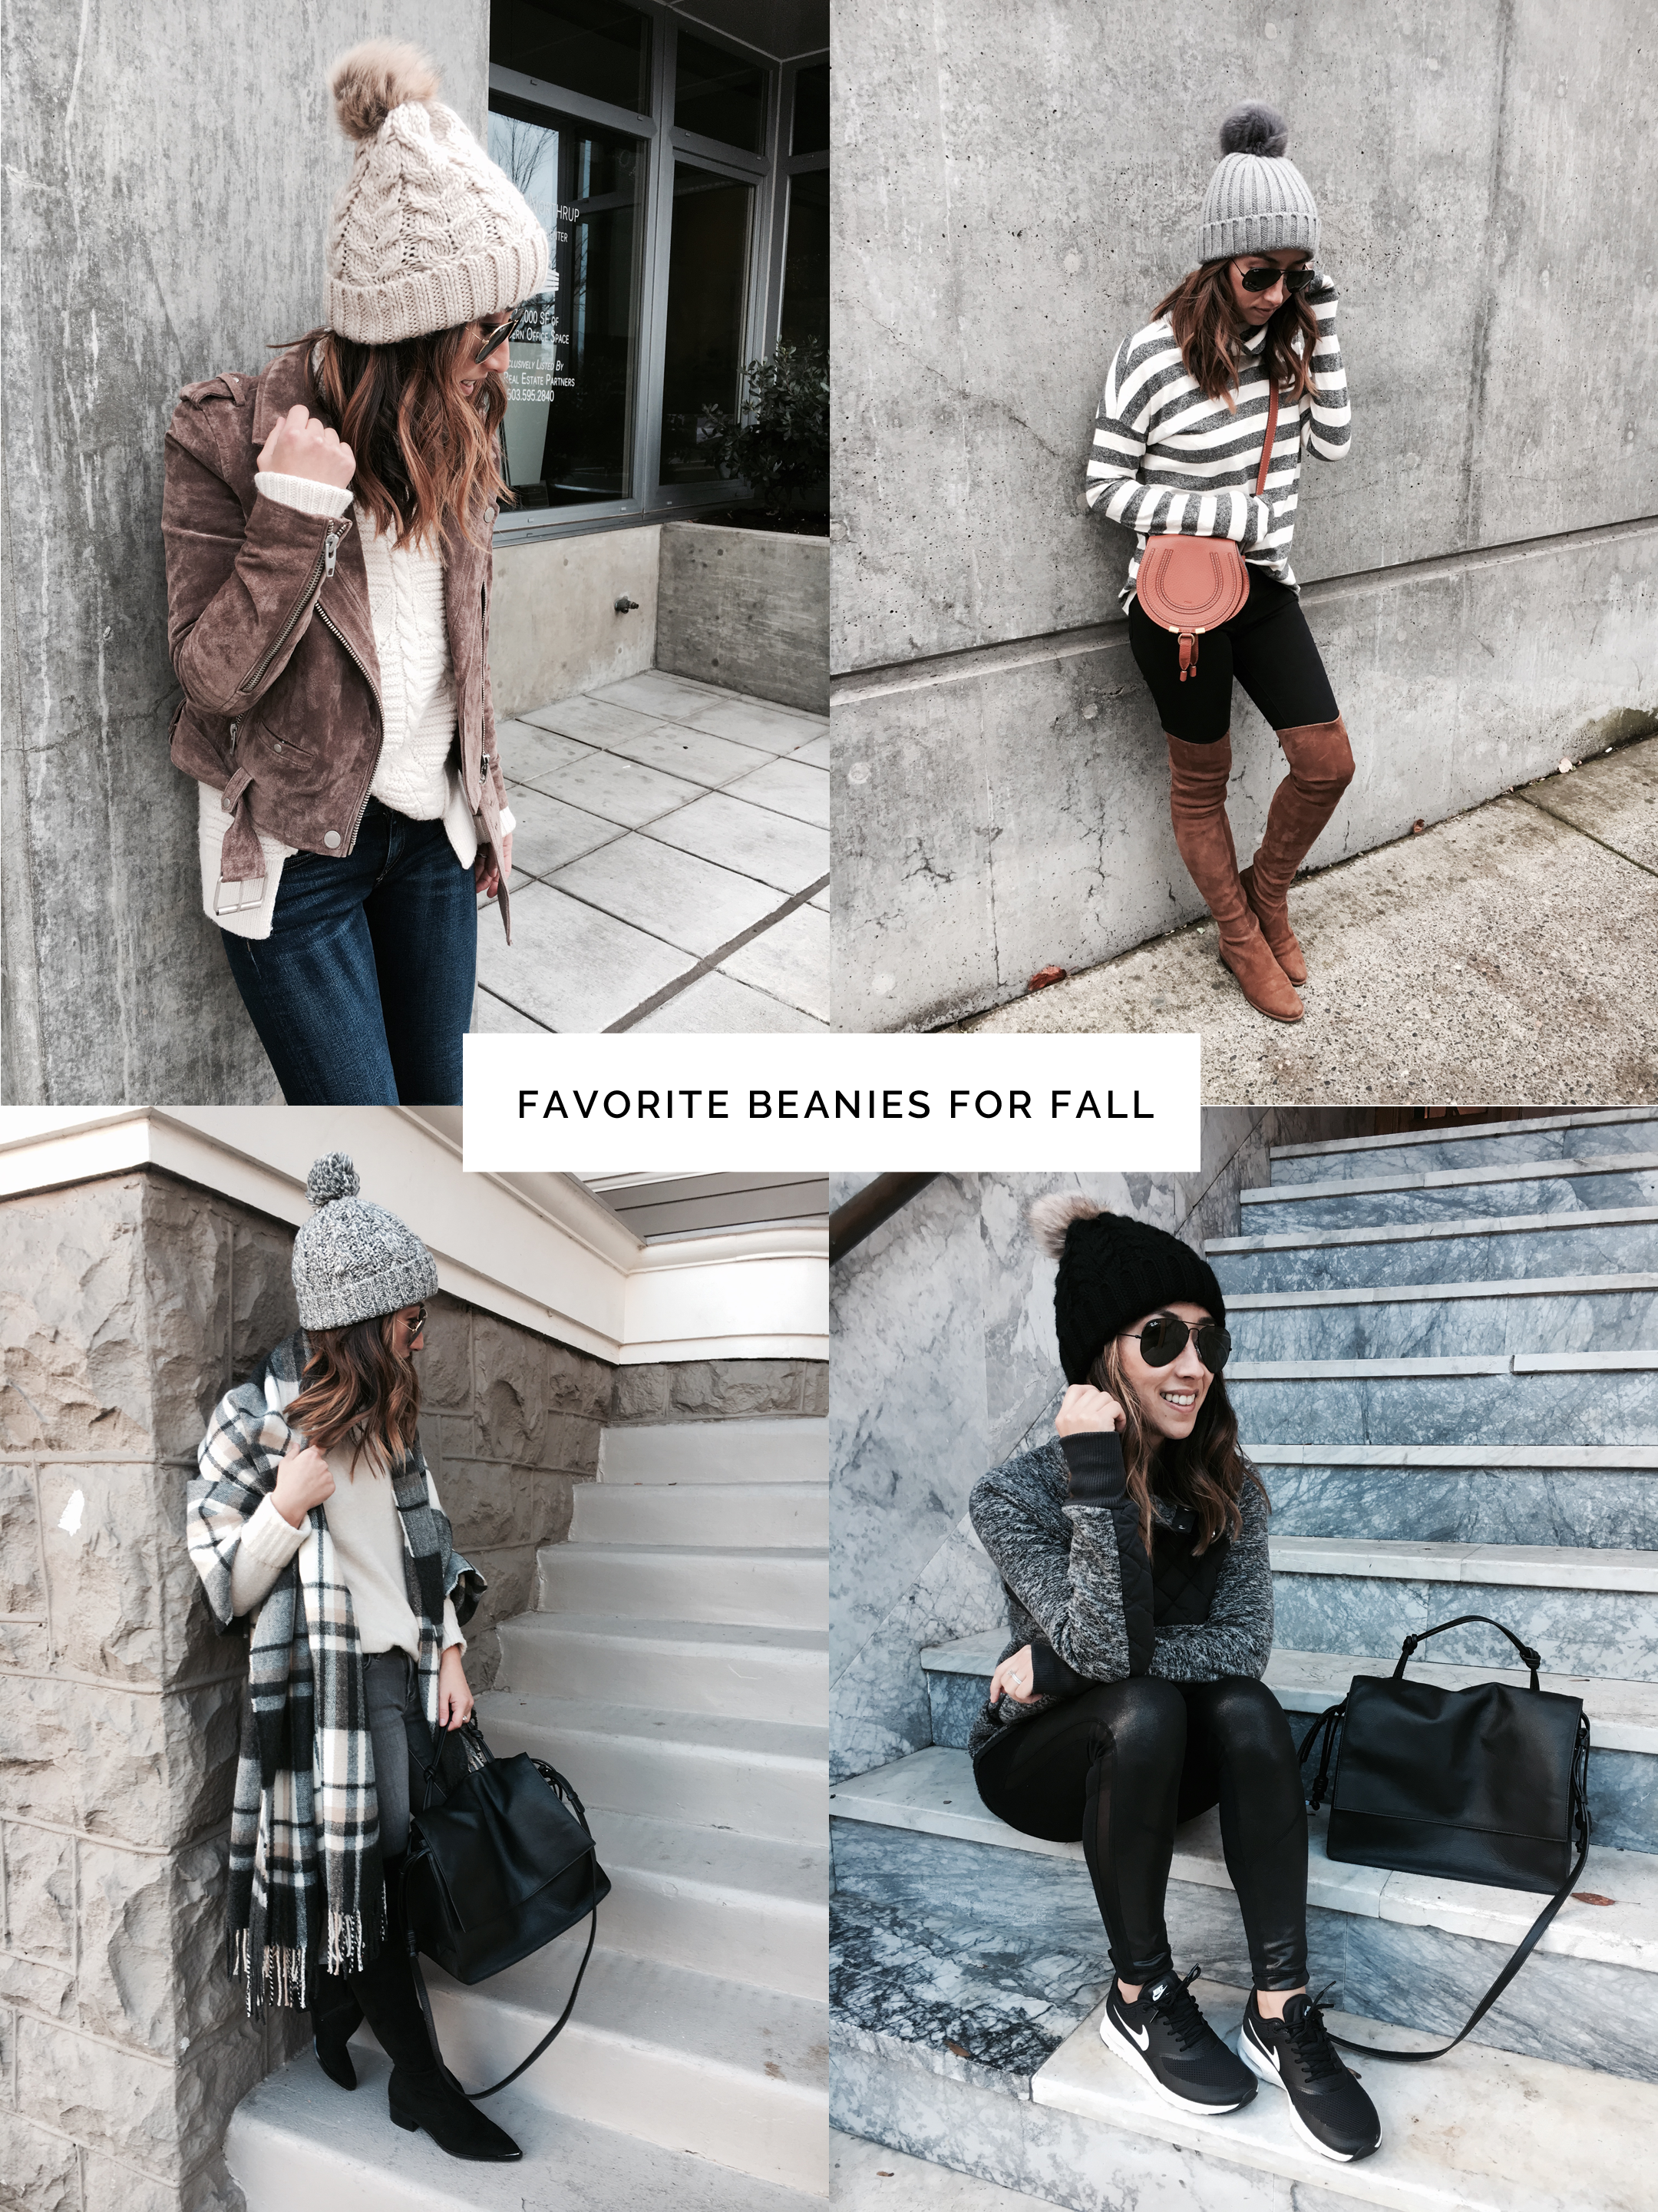 Favorite beanies for fall